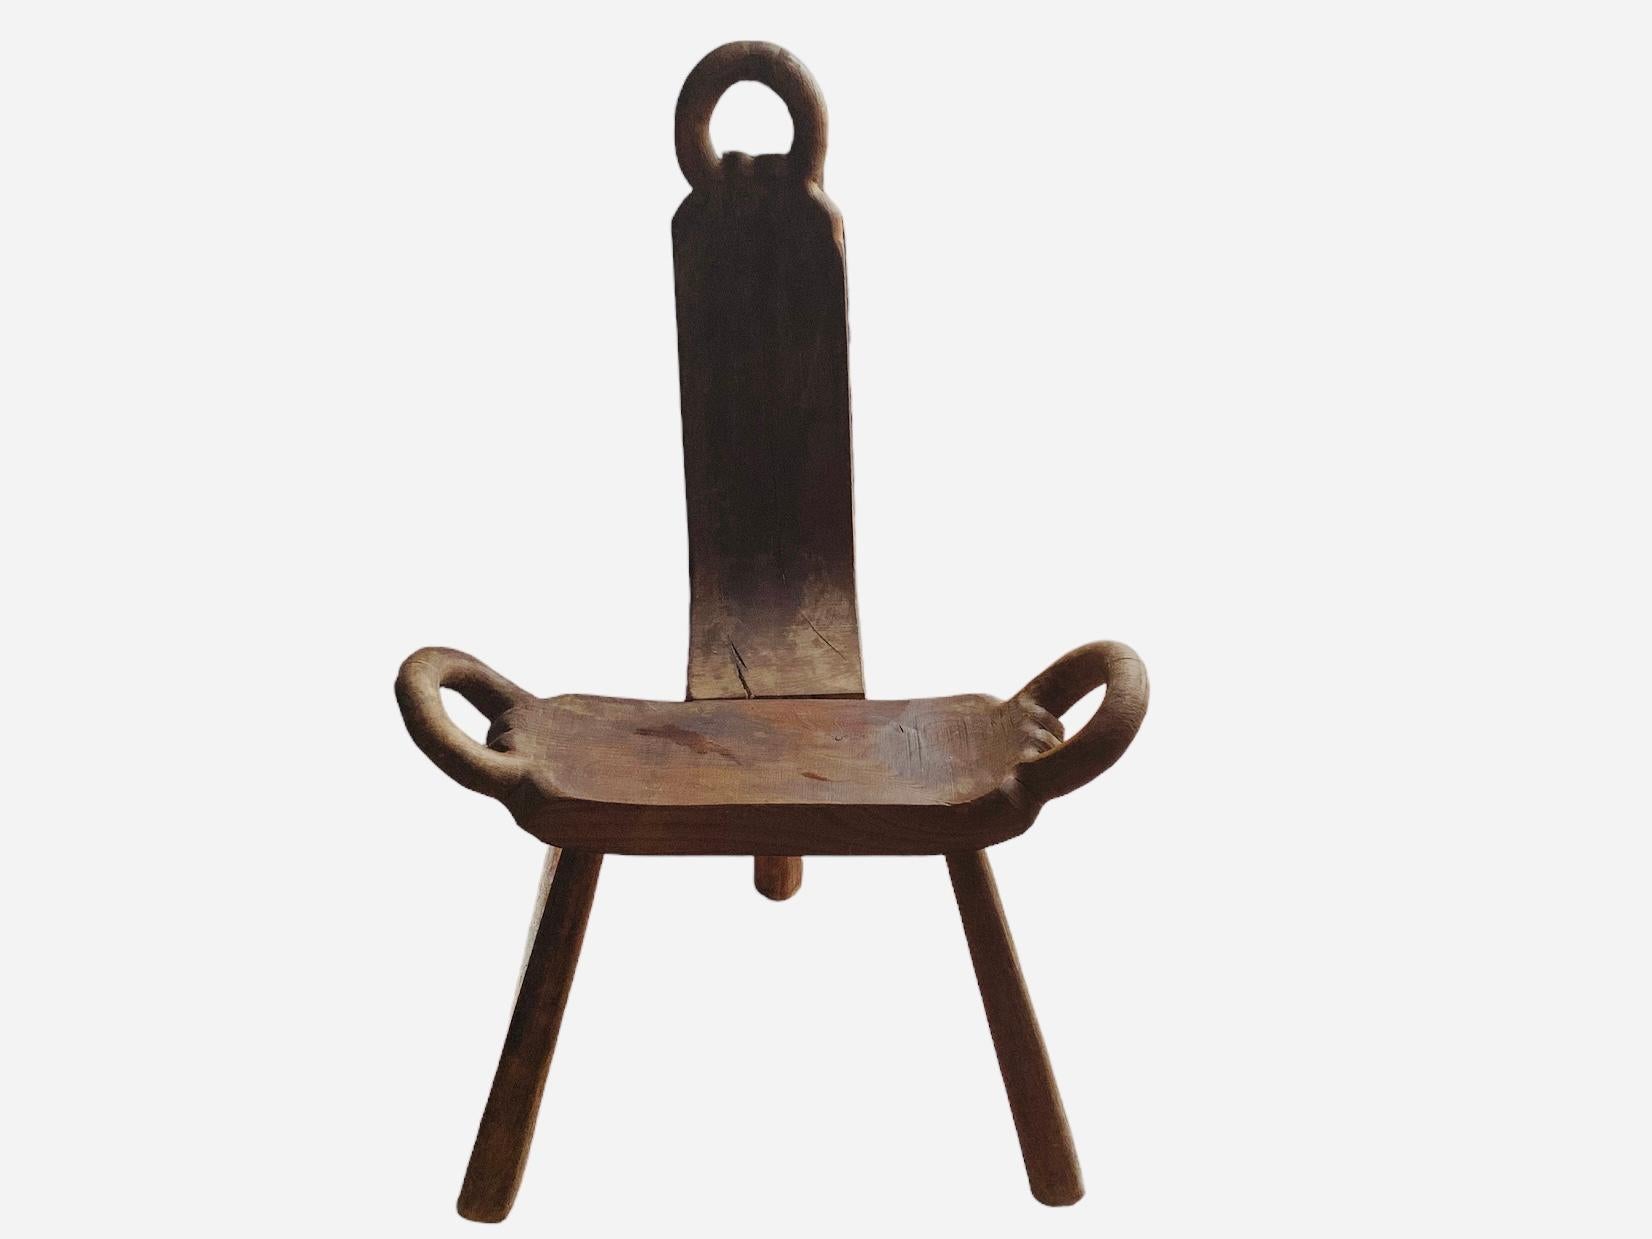 birthing chairs 1800s